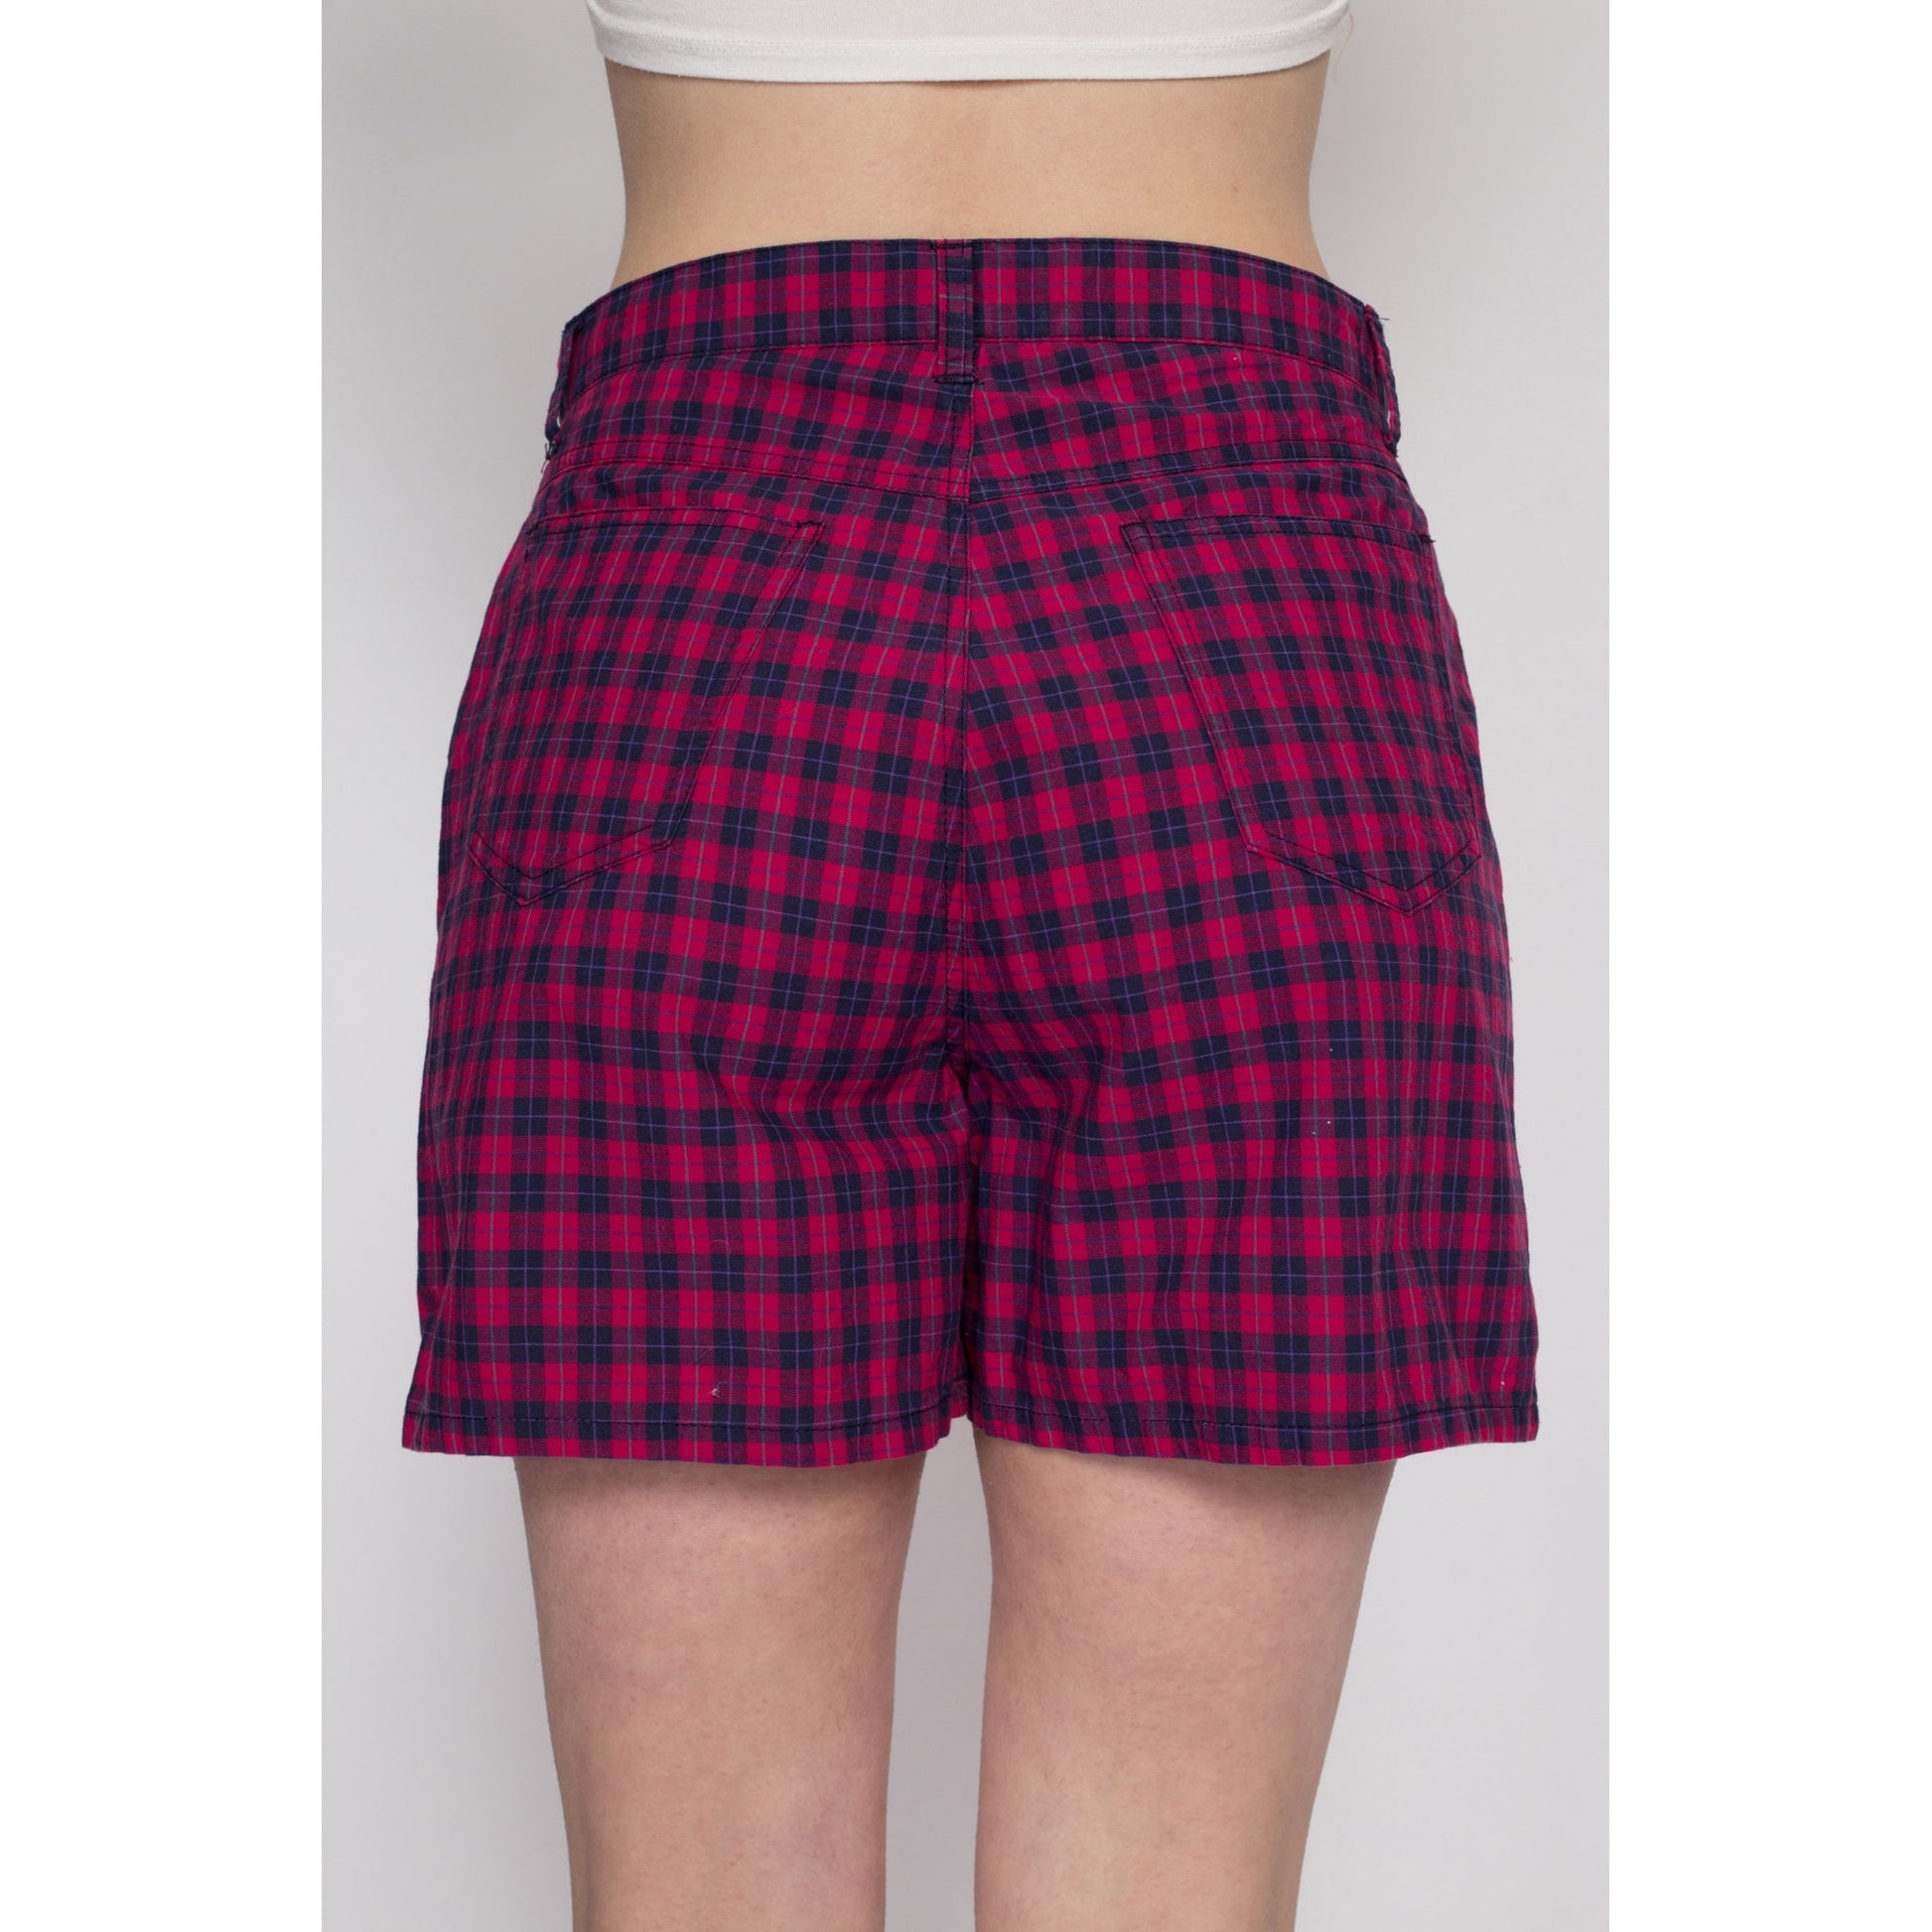 Medium 90s Hot Pink & Navy Blue Plaid Shorts 30.5" | Vintage Palmetto's High Waisted Casual Shorts